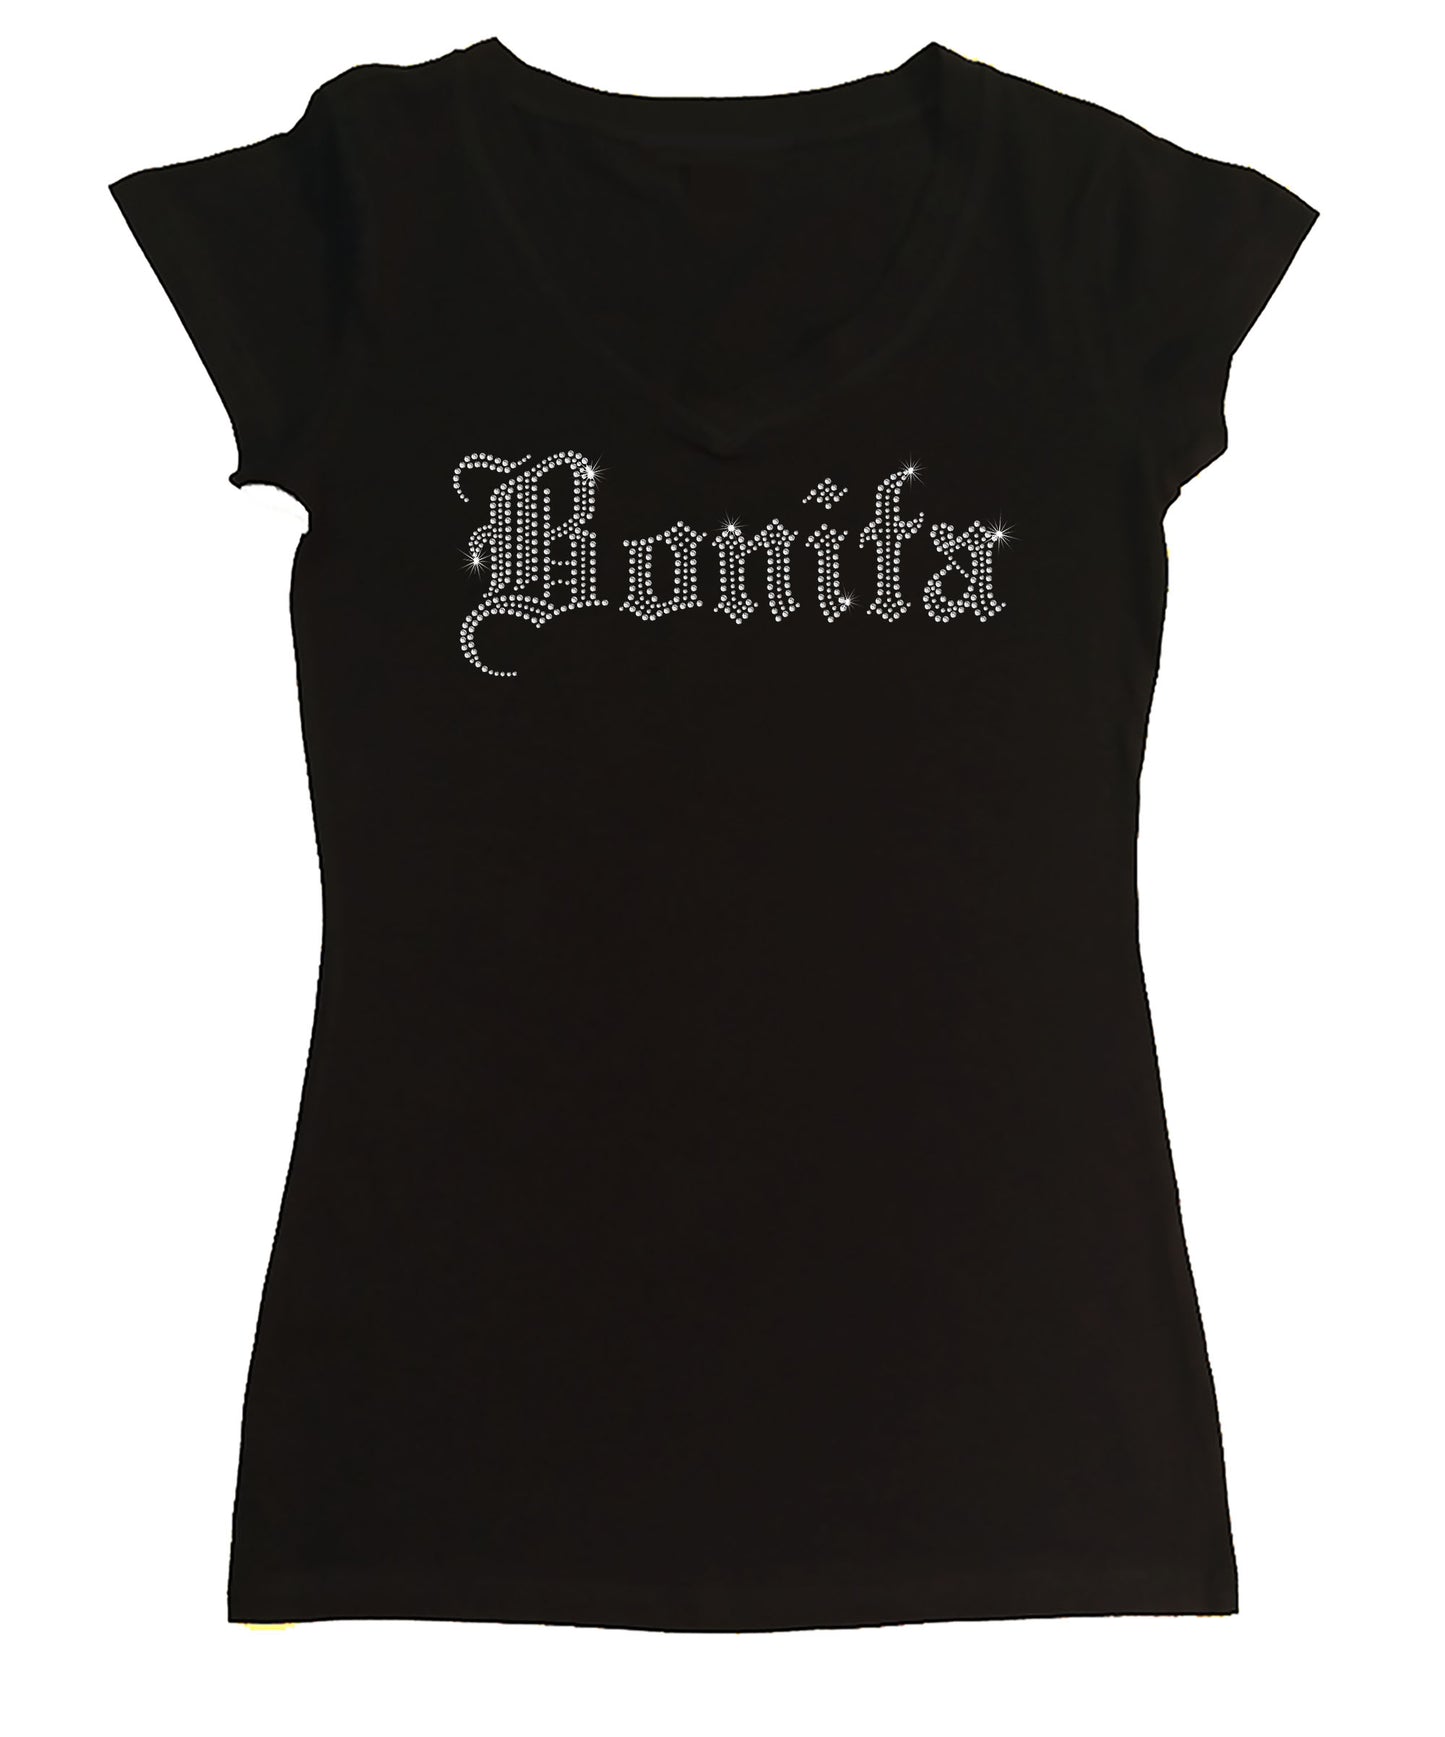 Womens T-shirt with Bonita in Rhinestones